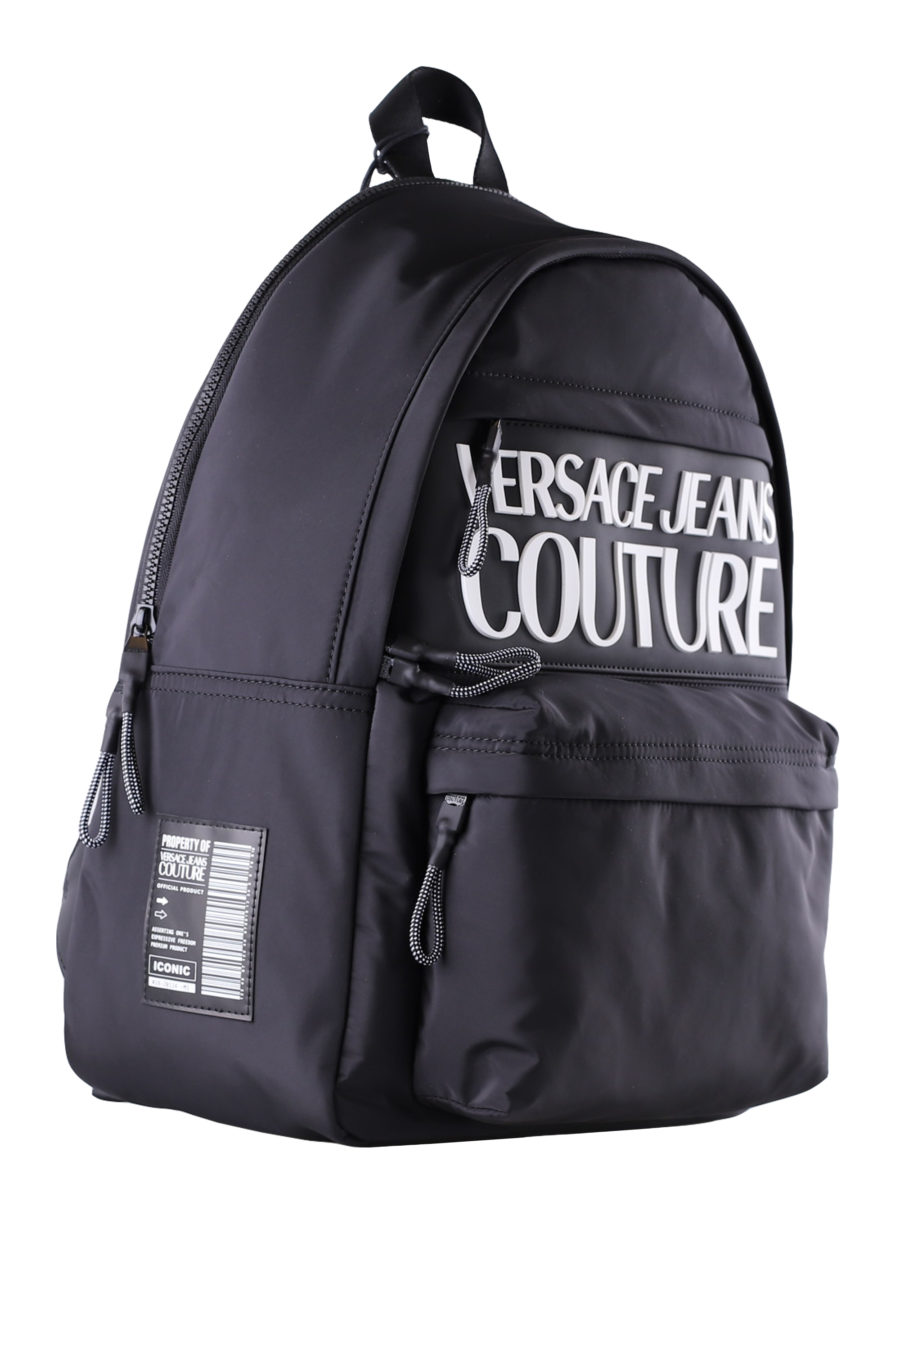 Black backpack with white rubberised logo - 462ee3f9ea54379882828c42475941e7377ecc206a